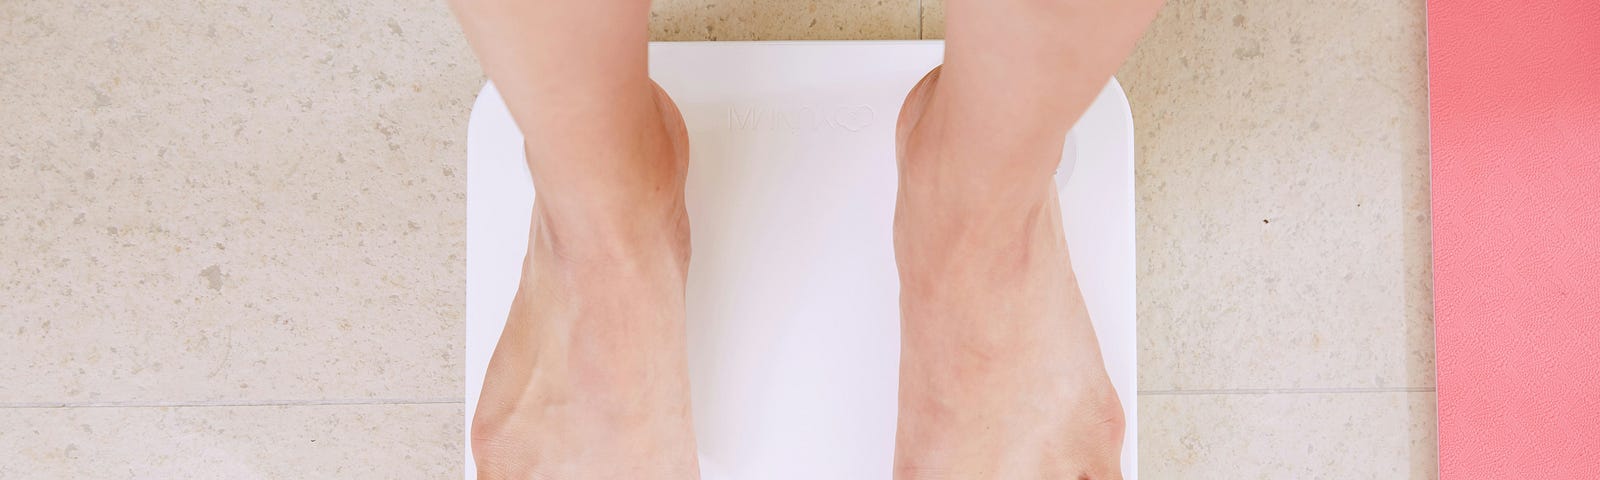 Feet standing on bathroom scales.